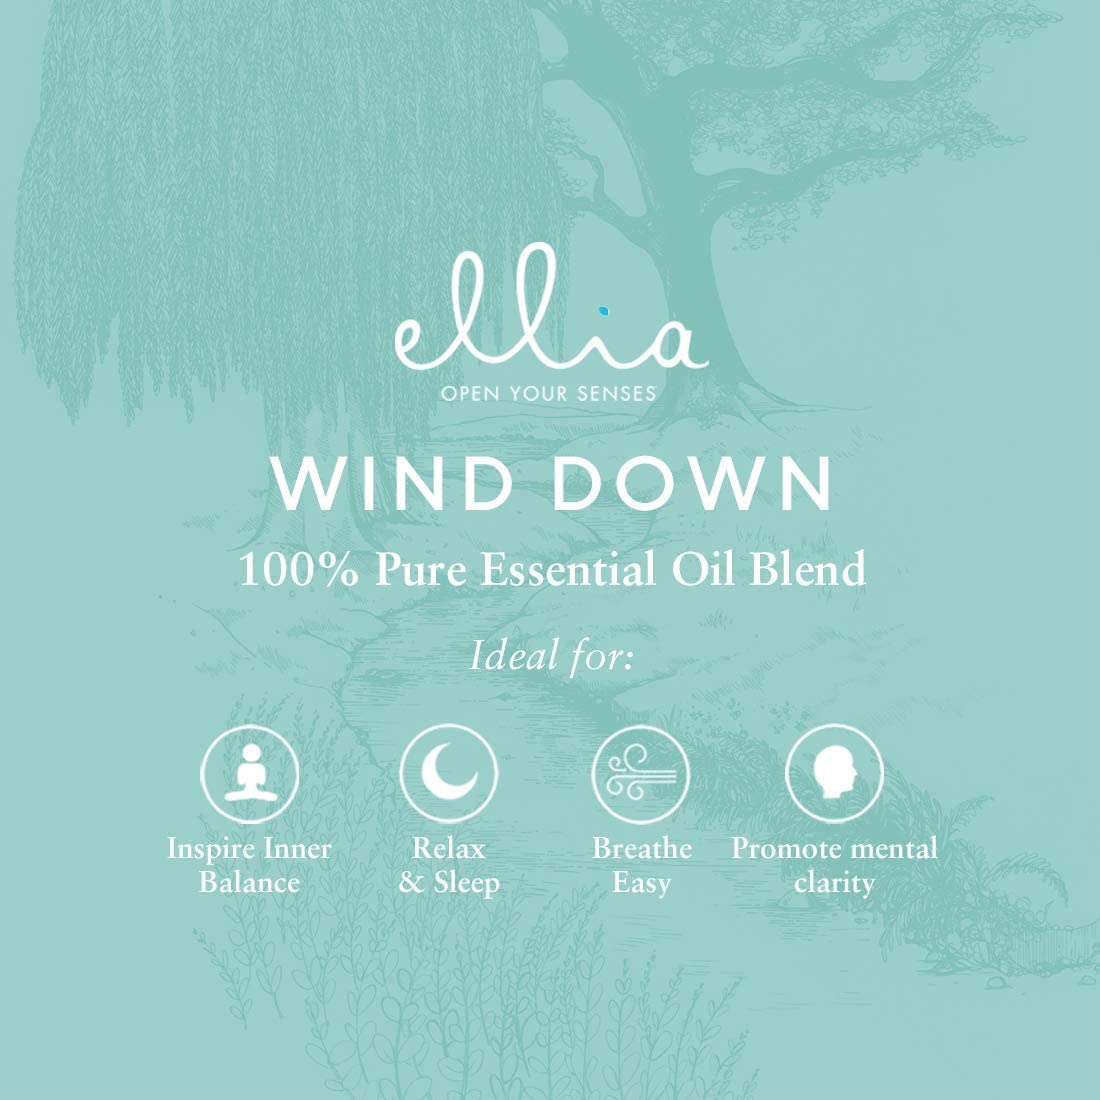 ellia wind down essential oil